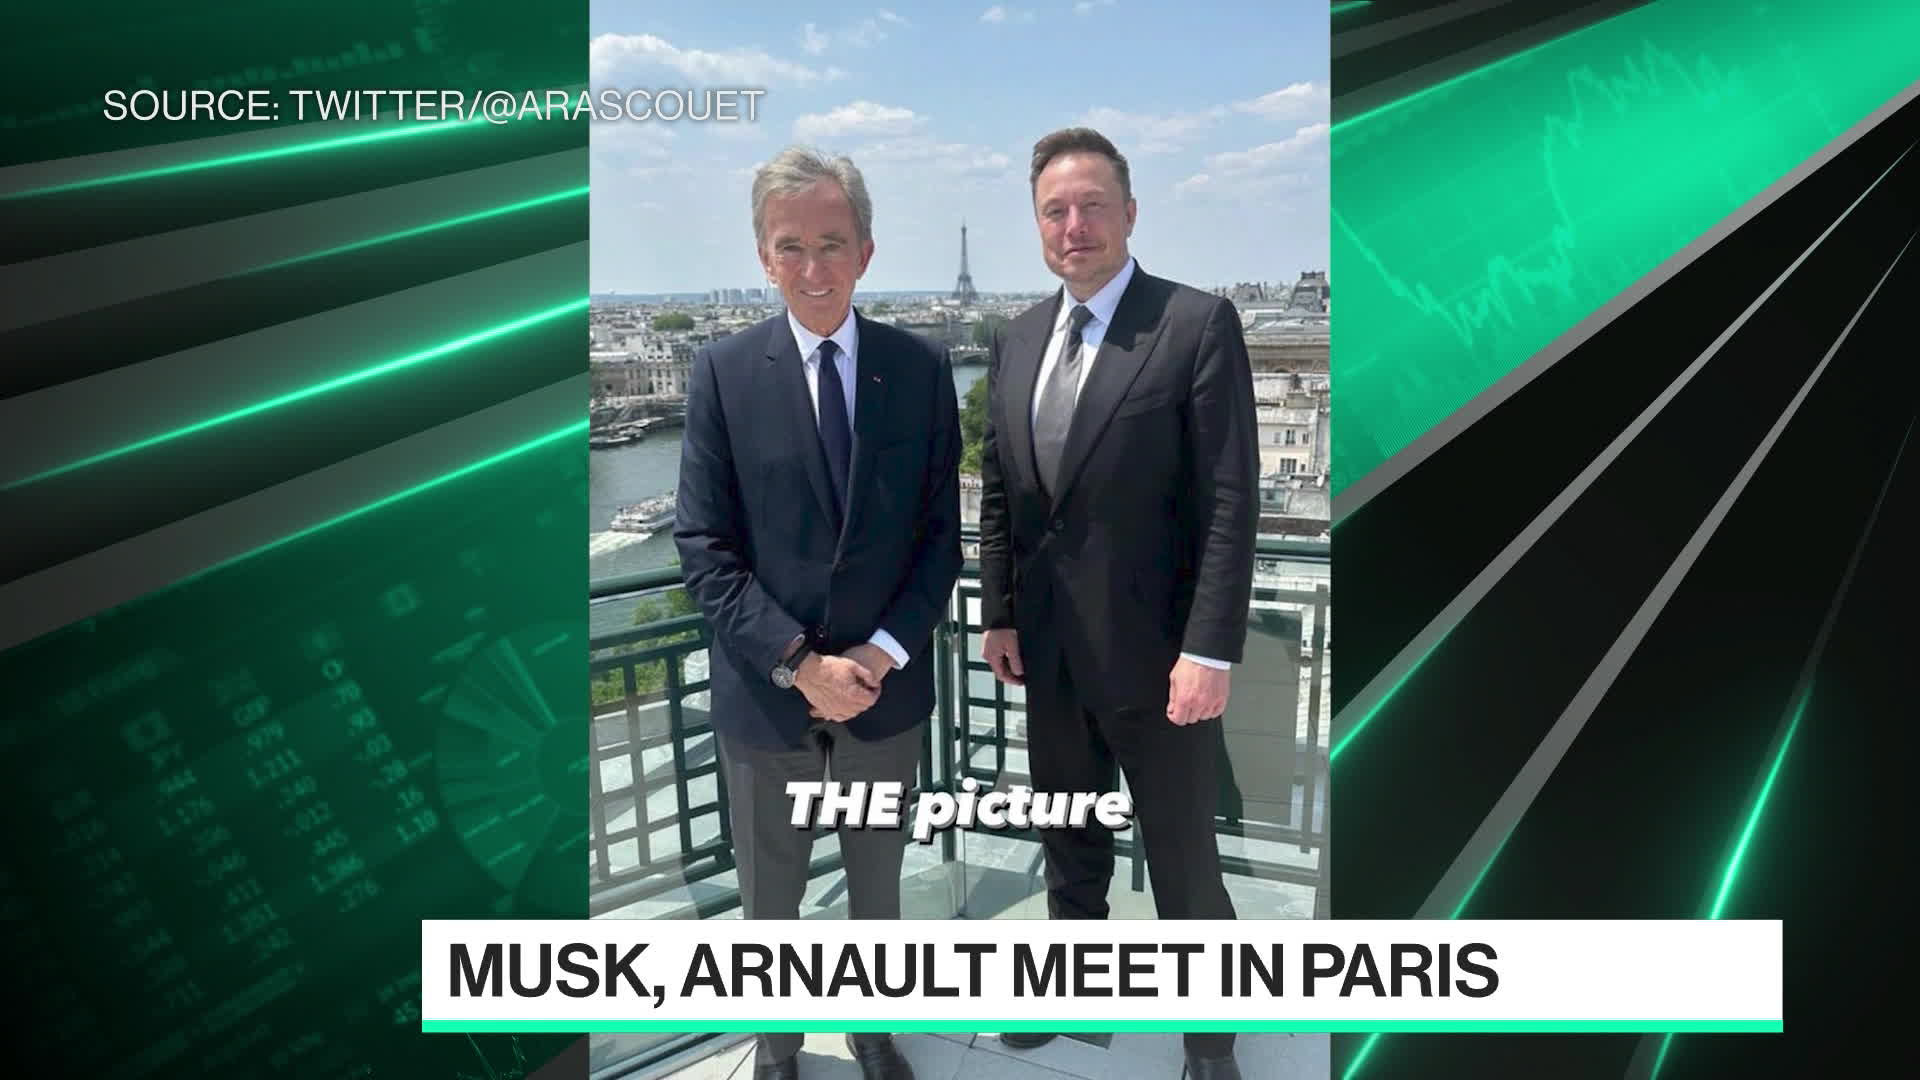 Who Is Bernard Arnault? Meet the Richest Person Alive.